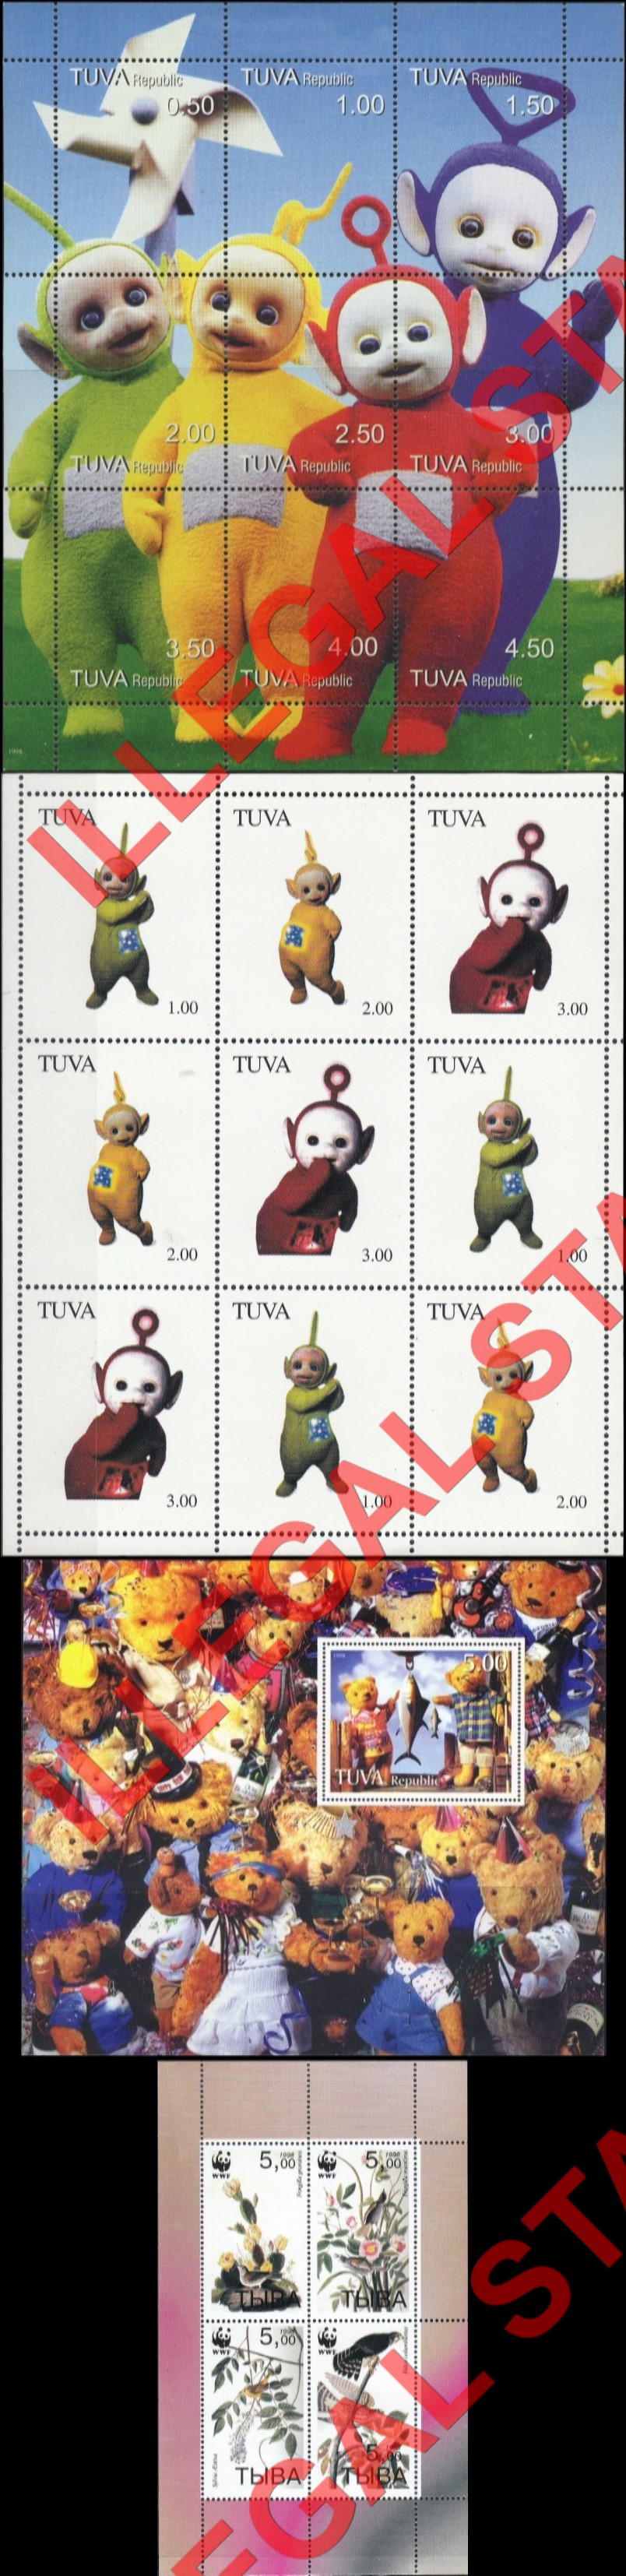 Republic of Tuva 1998 Counterfeit Illegal Stamps (Part 2)